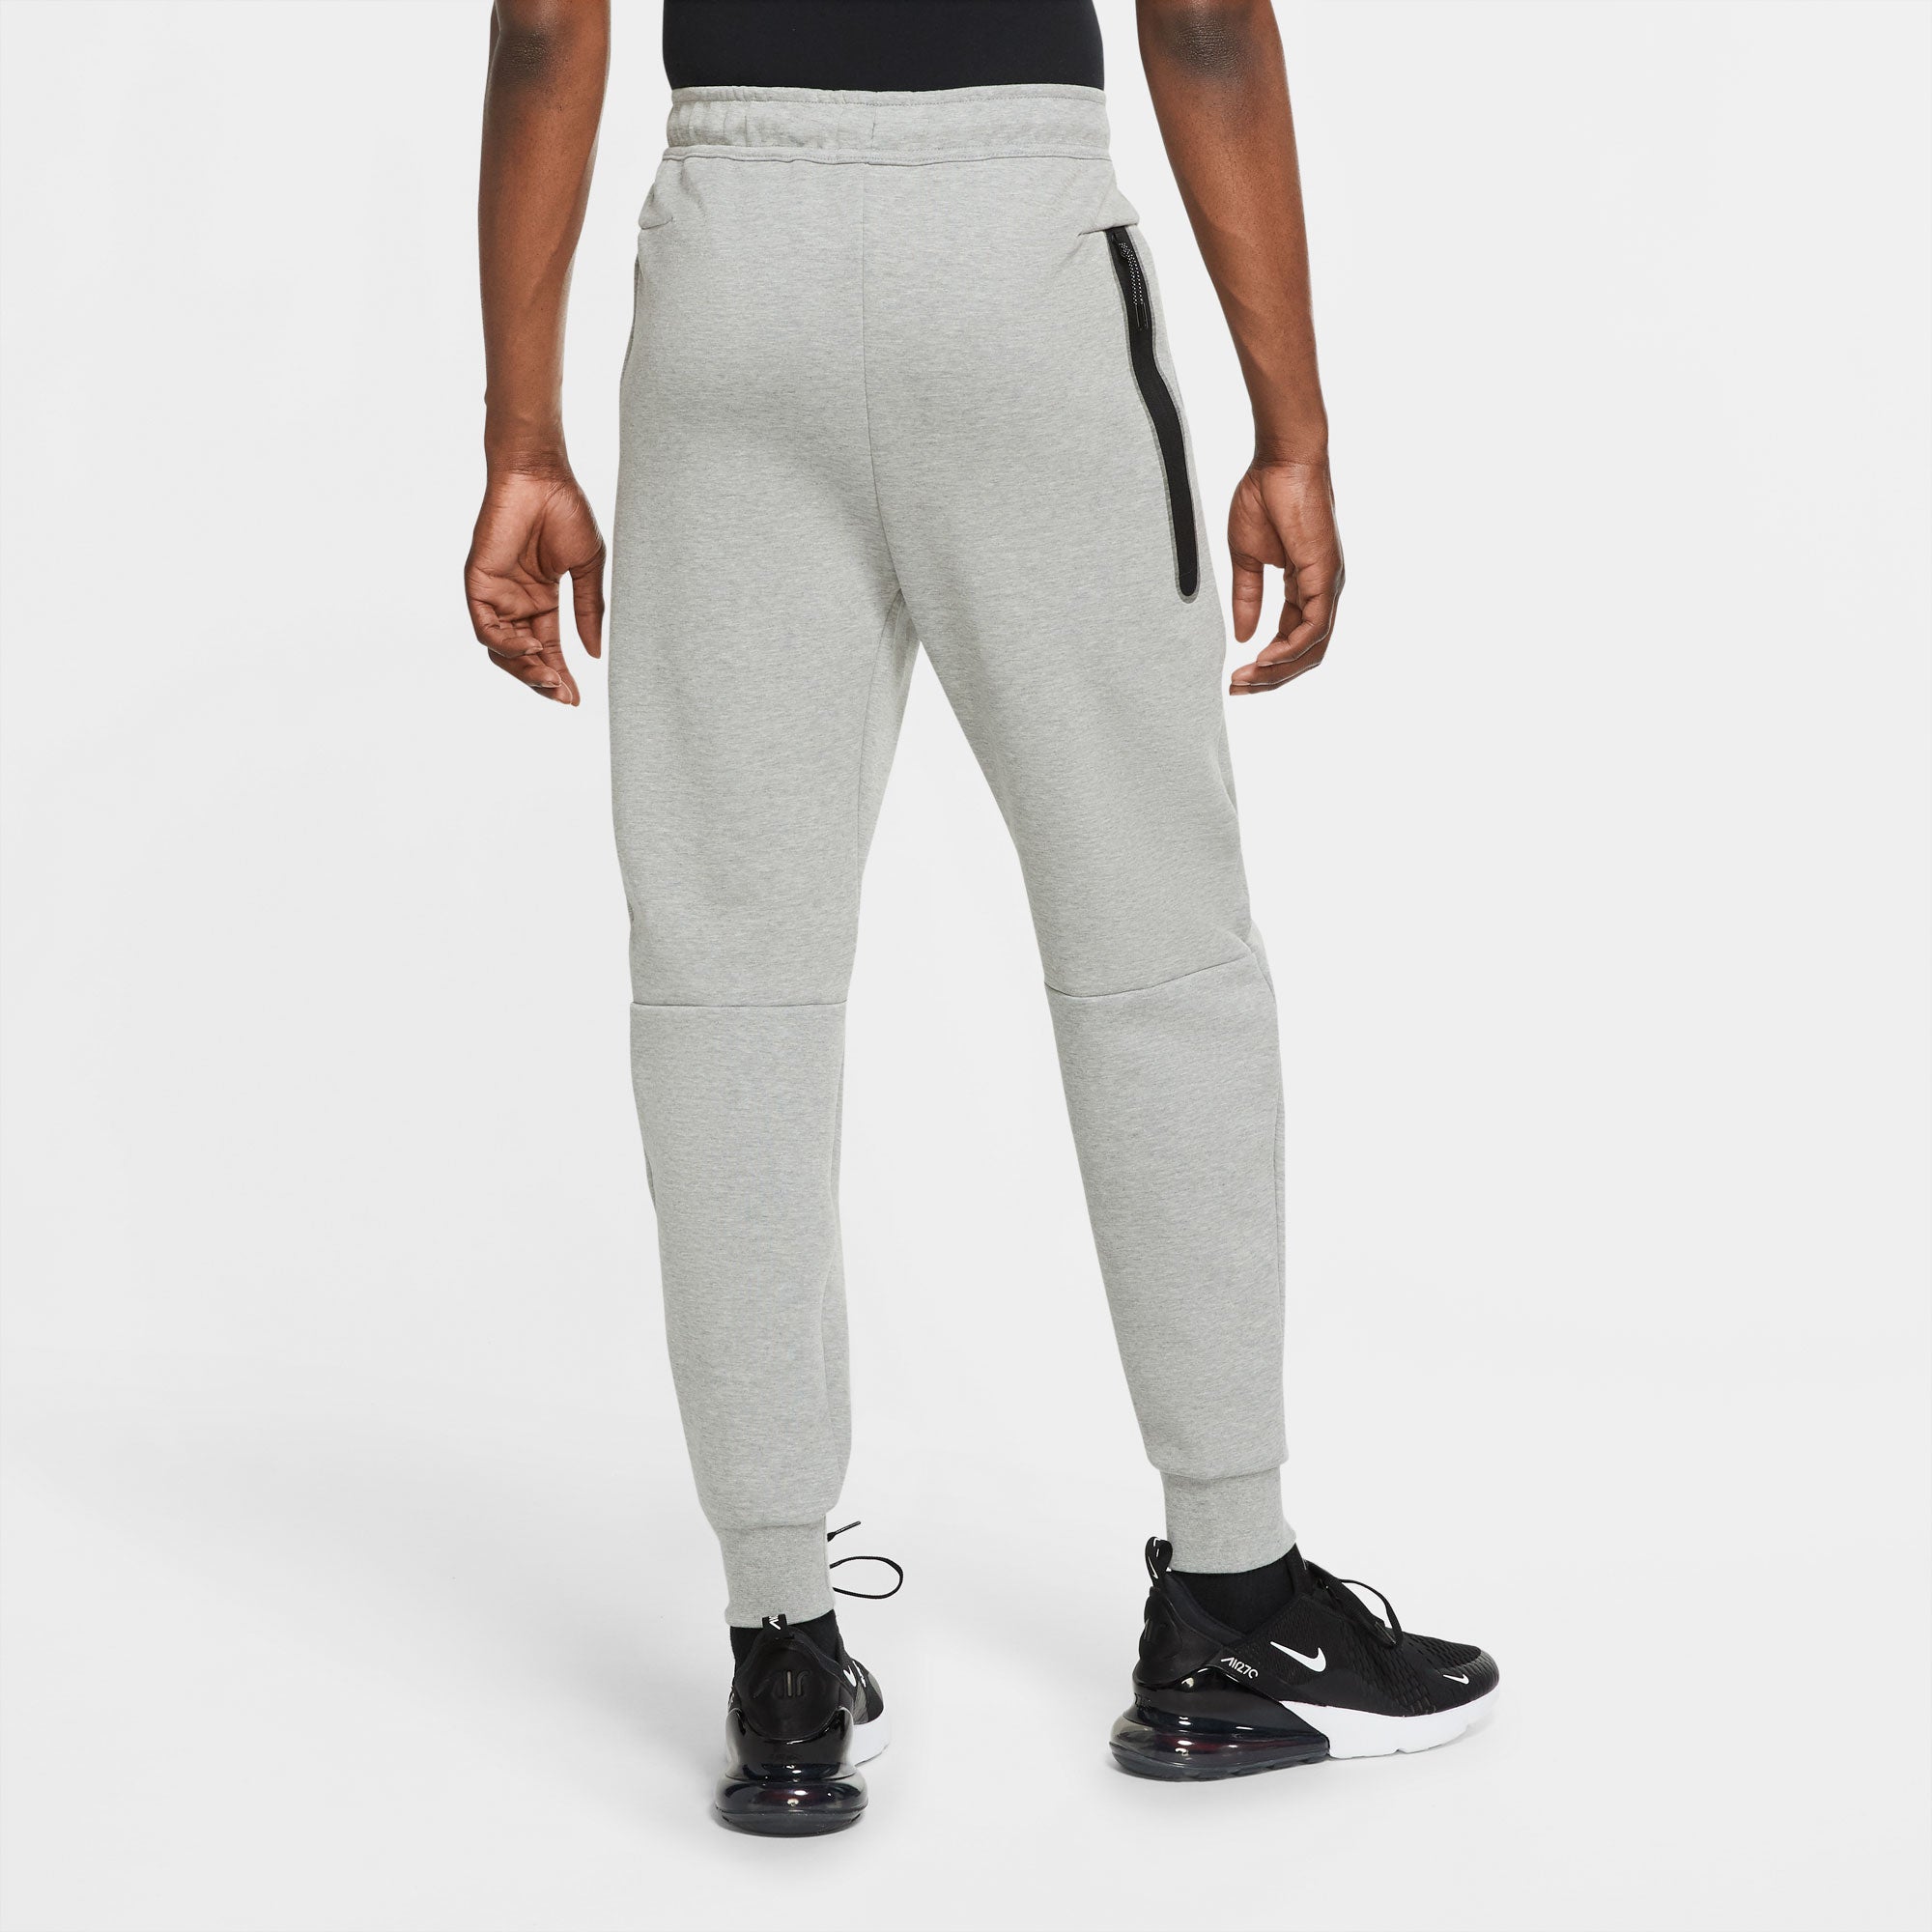 Nike Tech Fleece Men's Pants Grey (2)